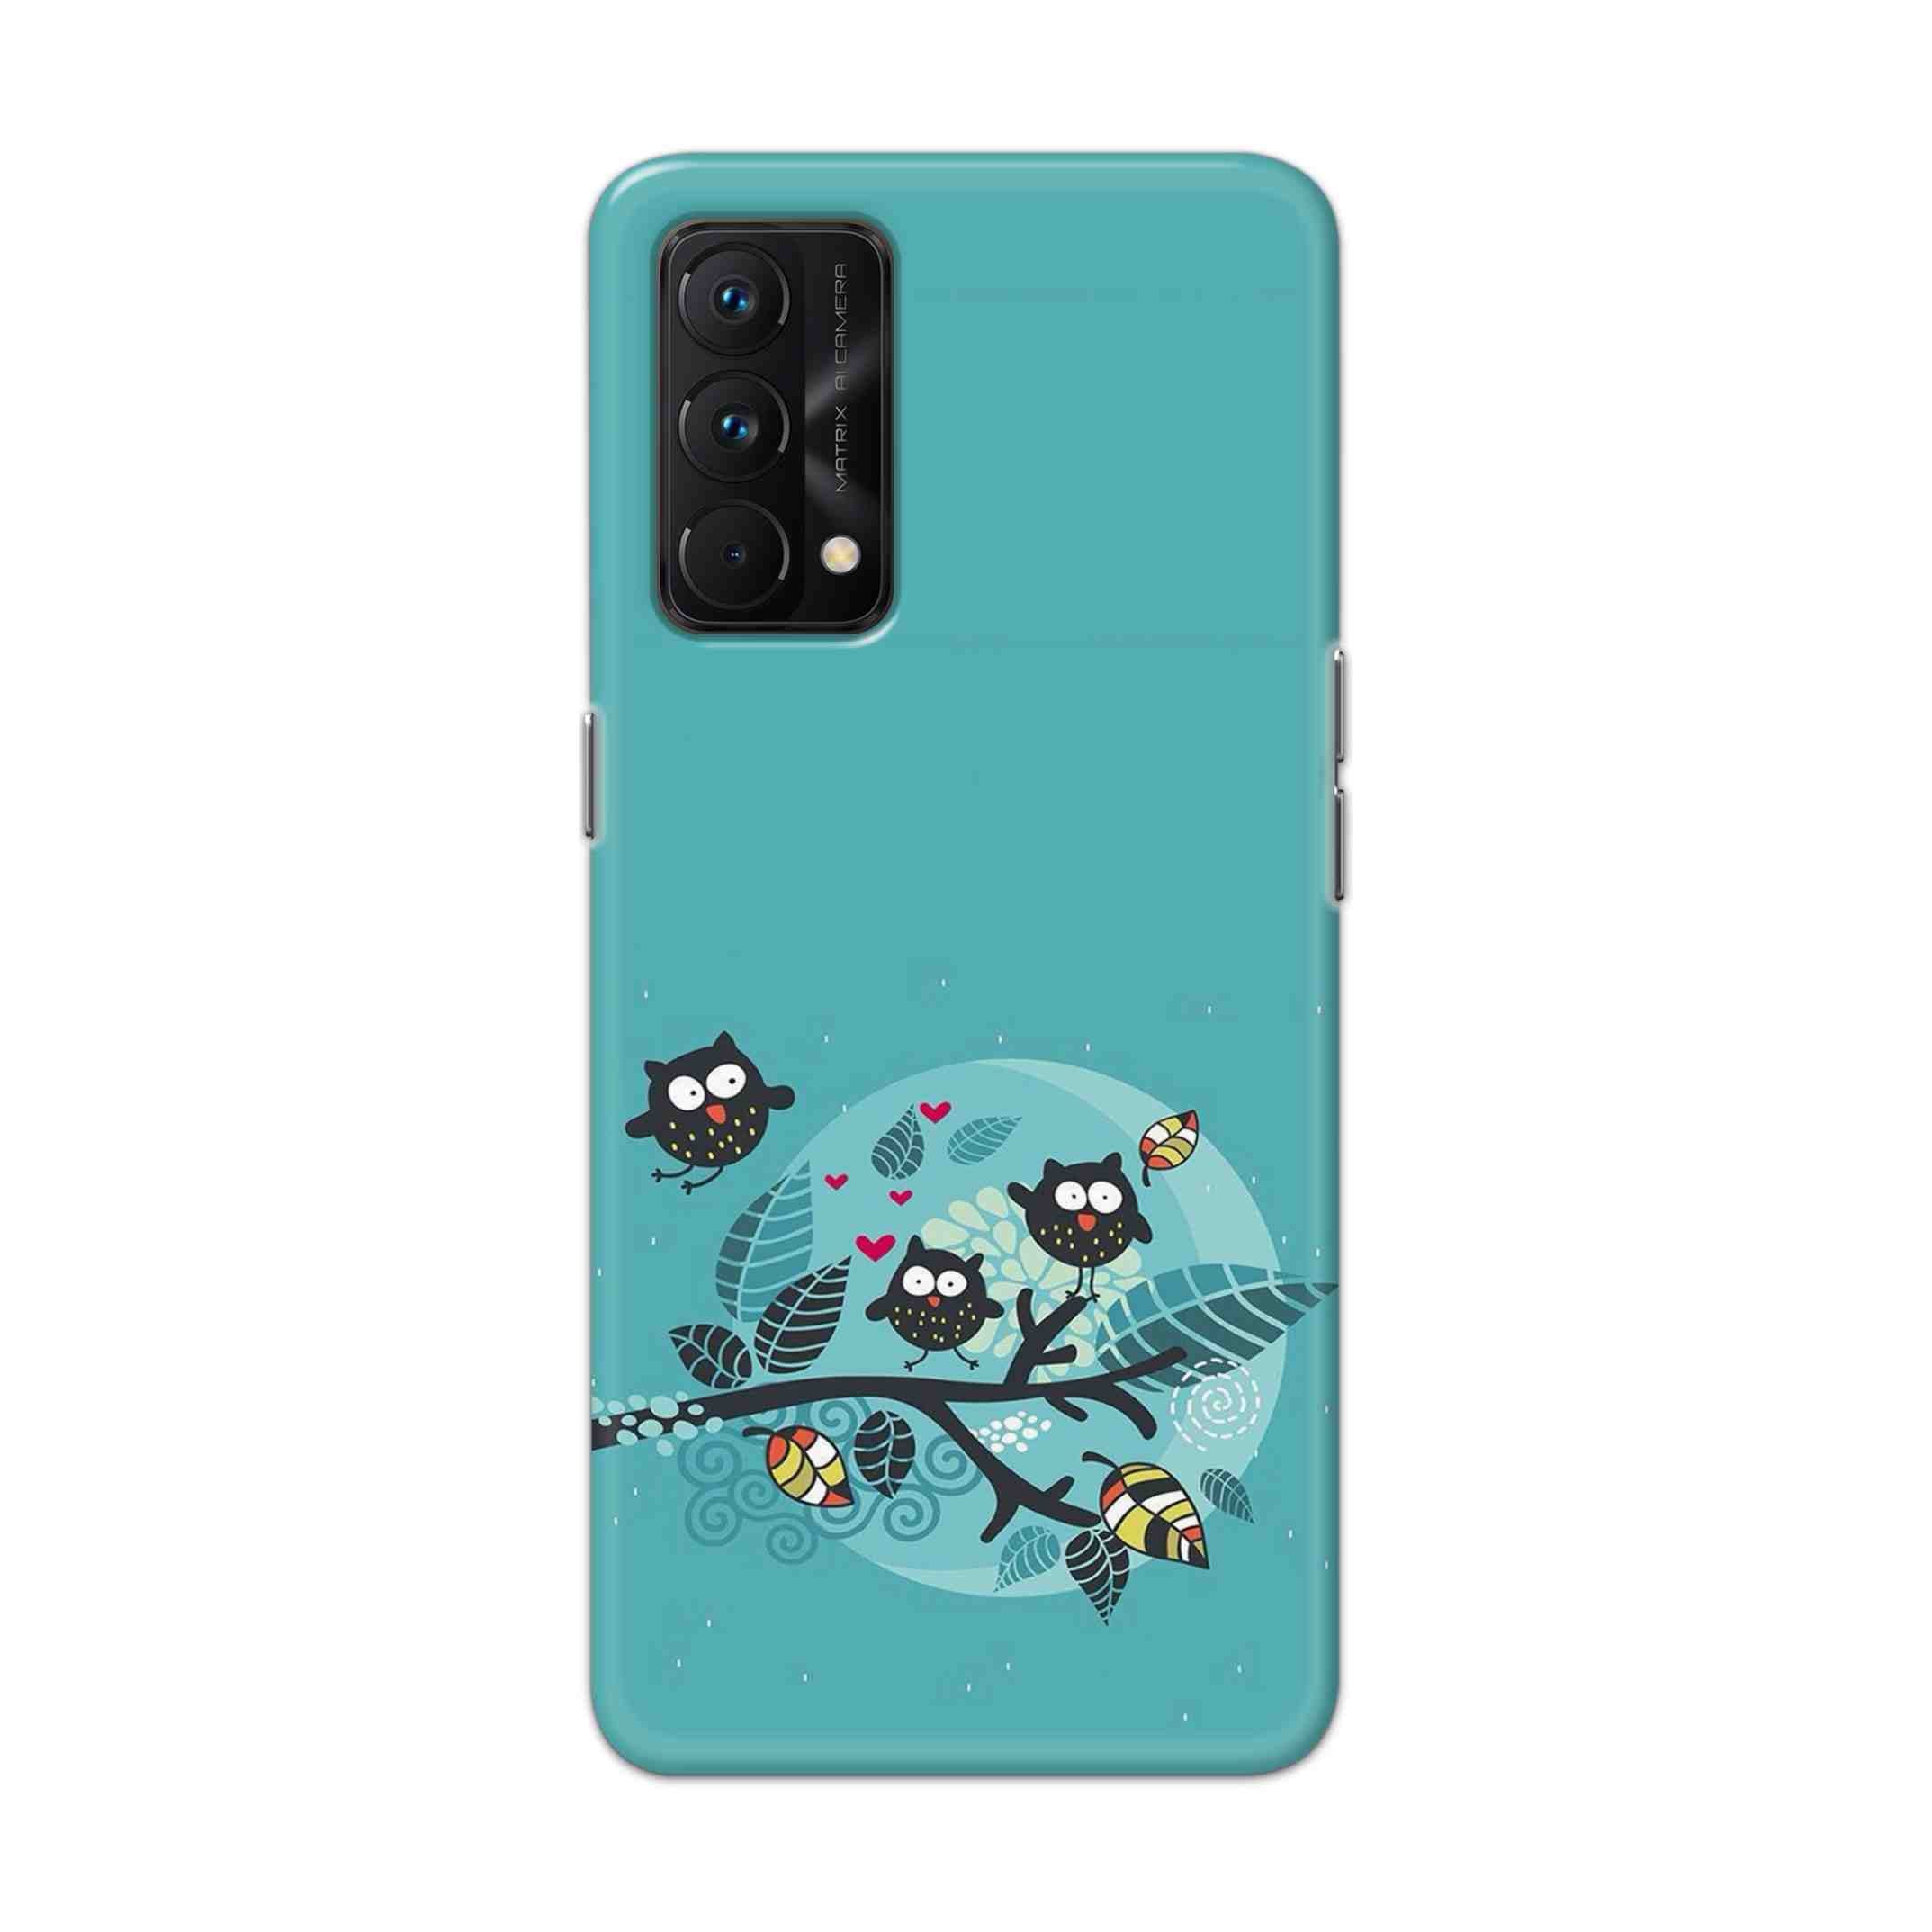 Buy Owl Hard Back Mobile Phone Case Cover For Realme GT Master Online